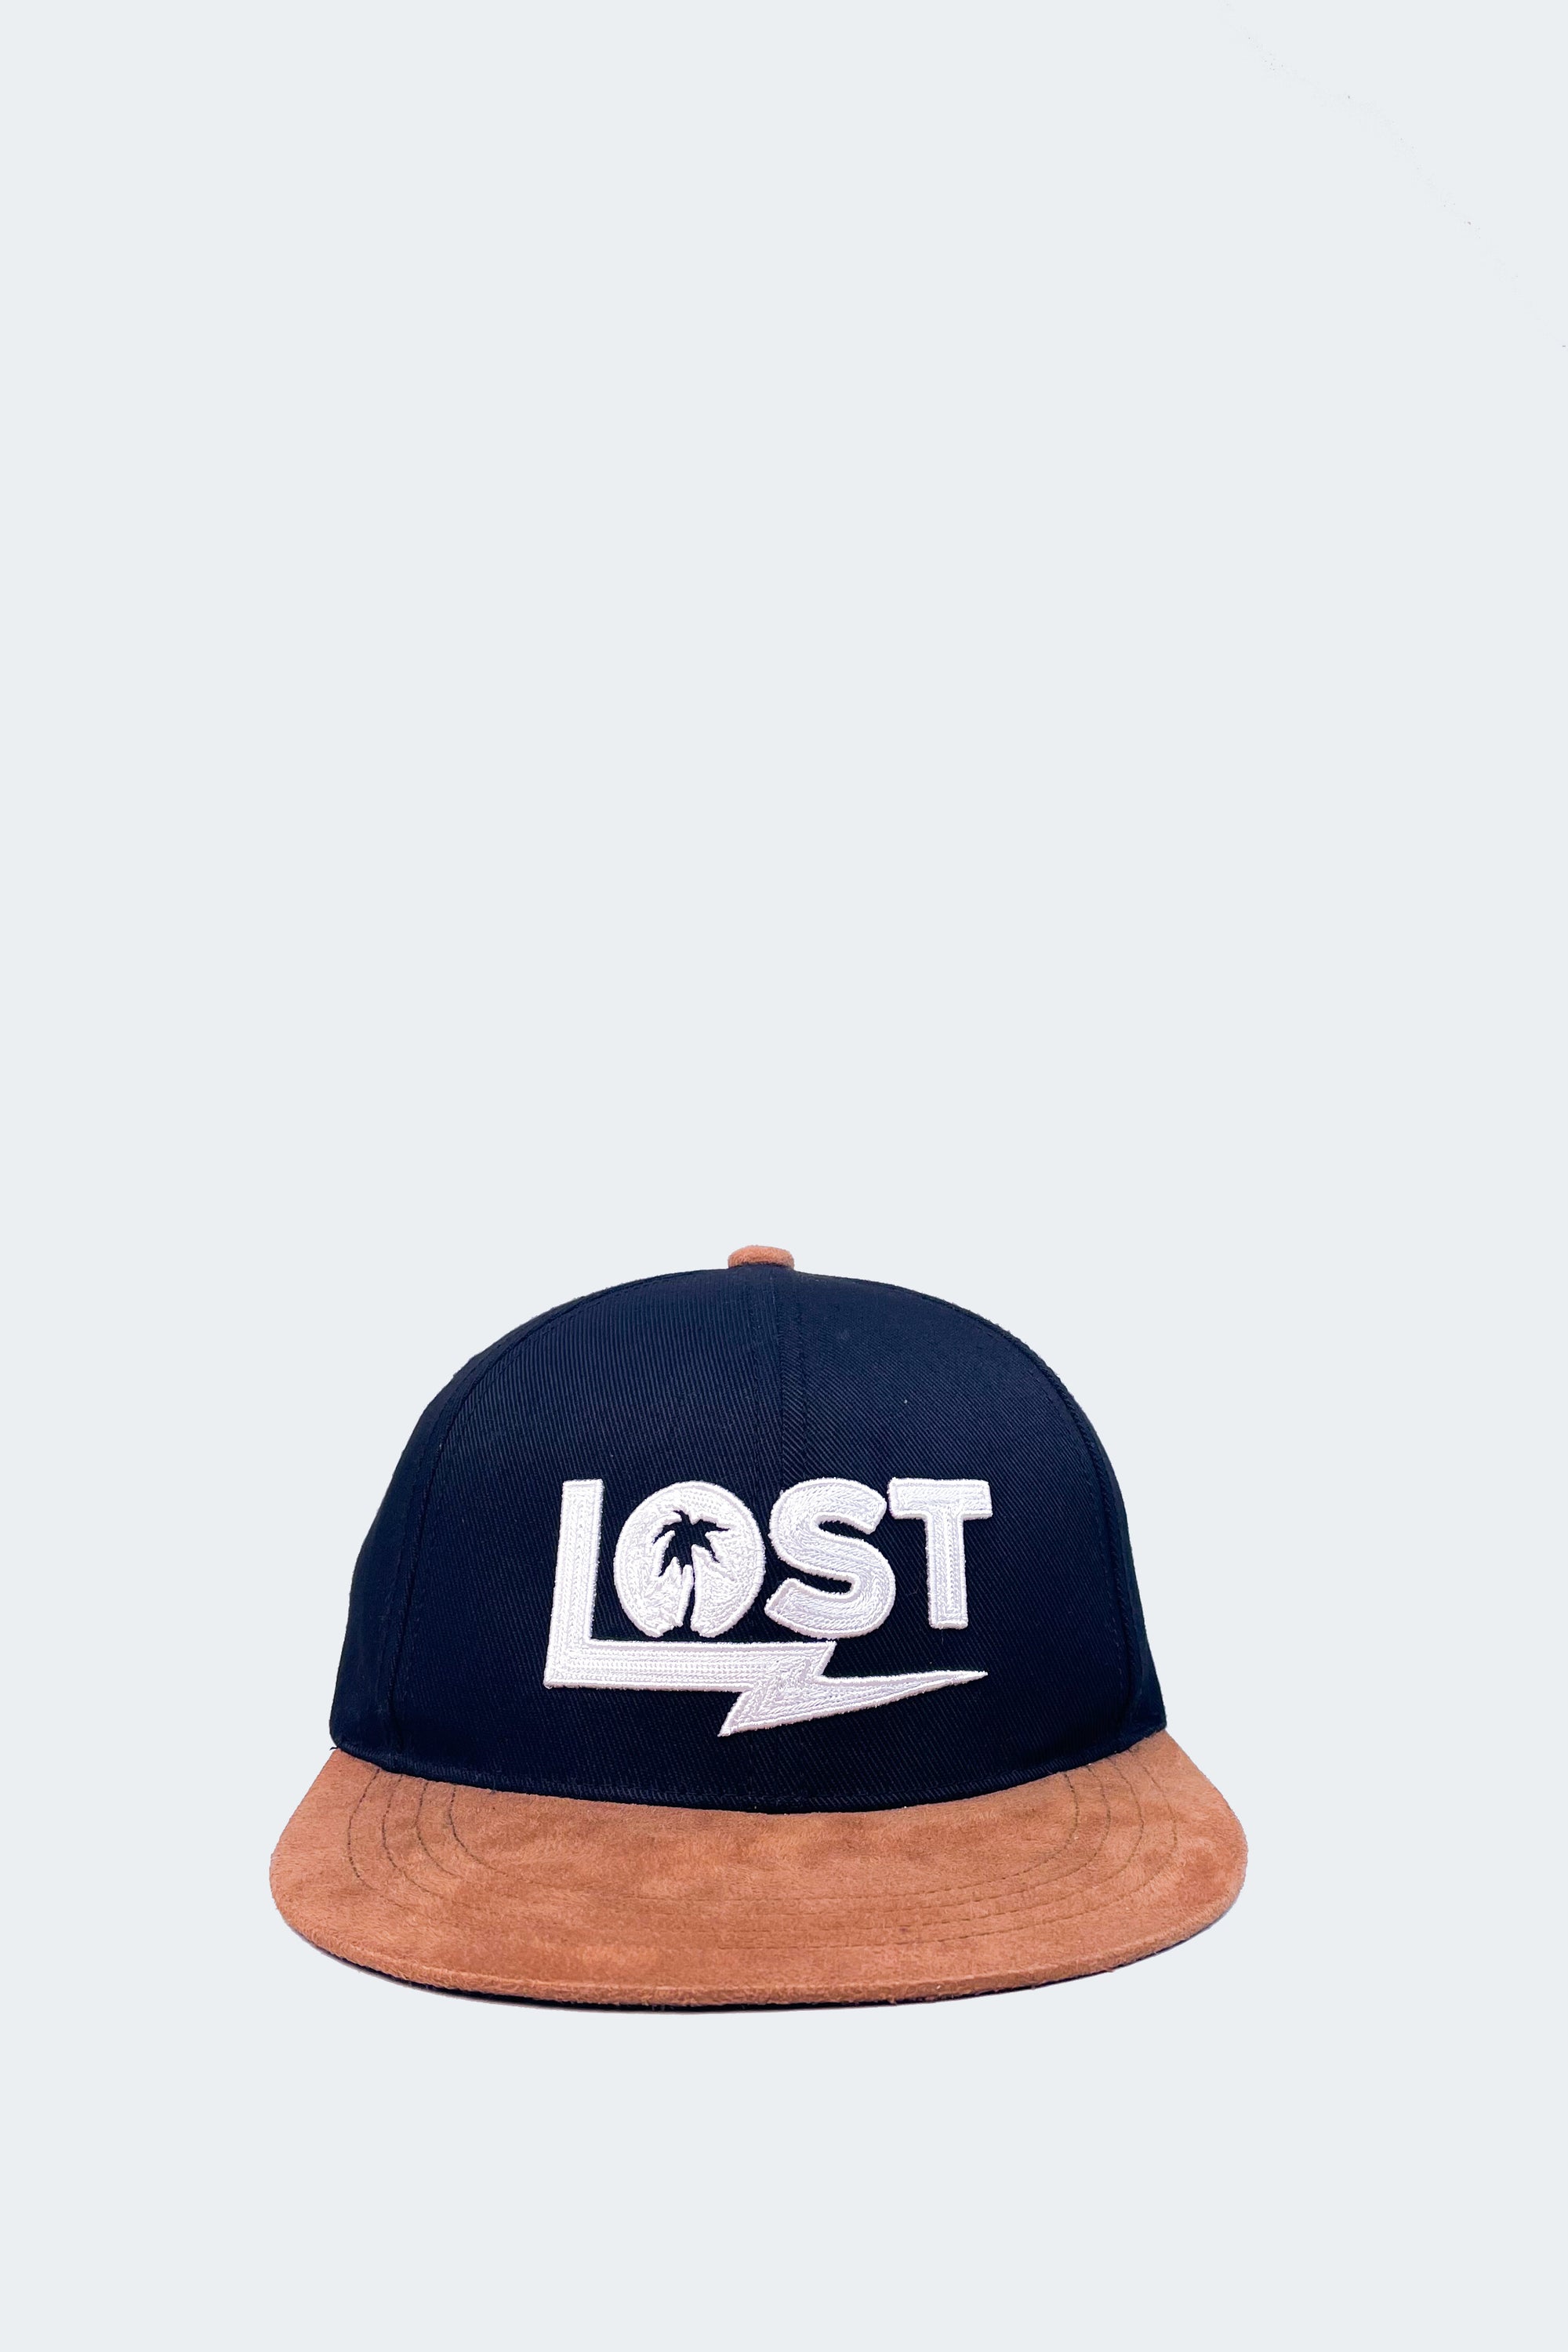 Lost Suede Caps